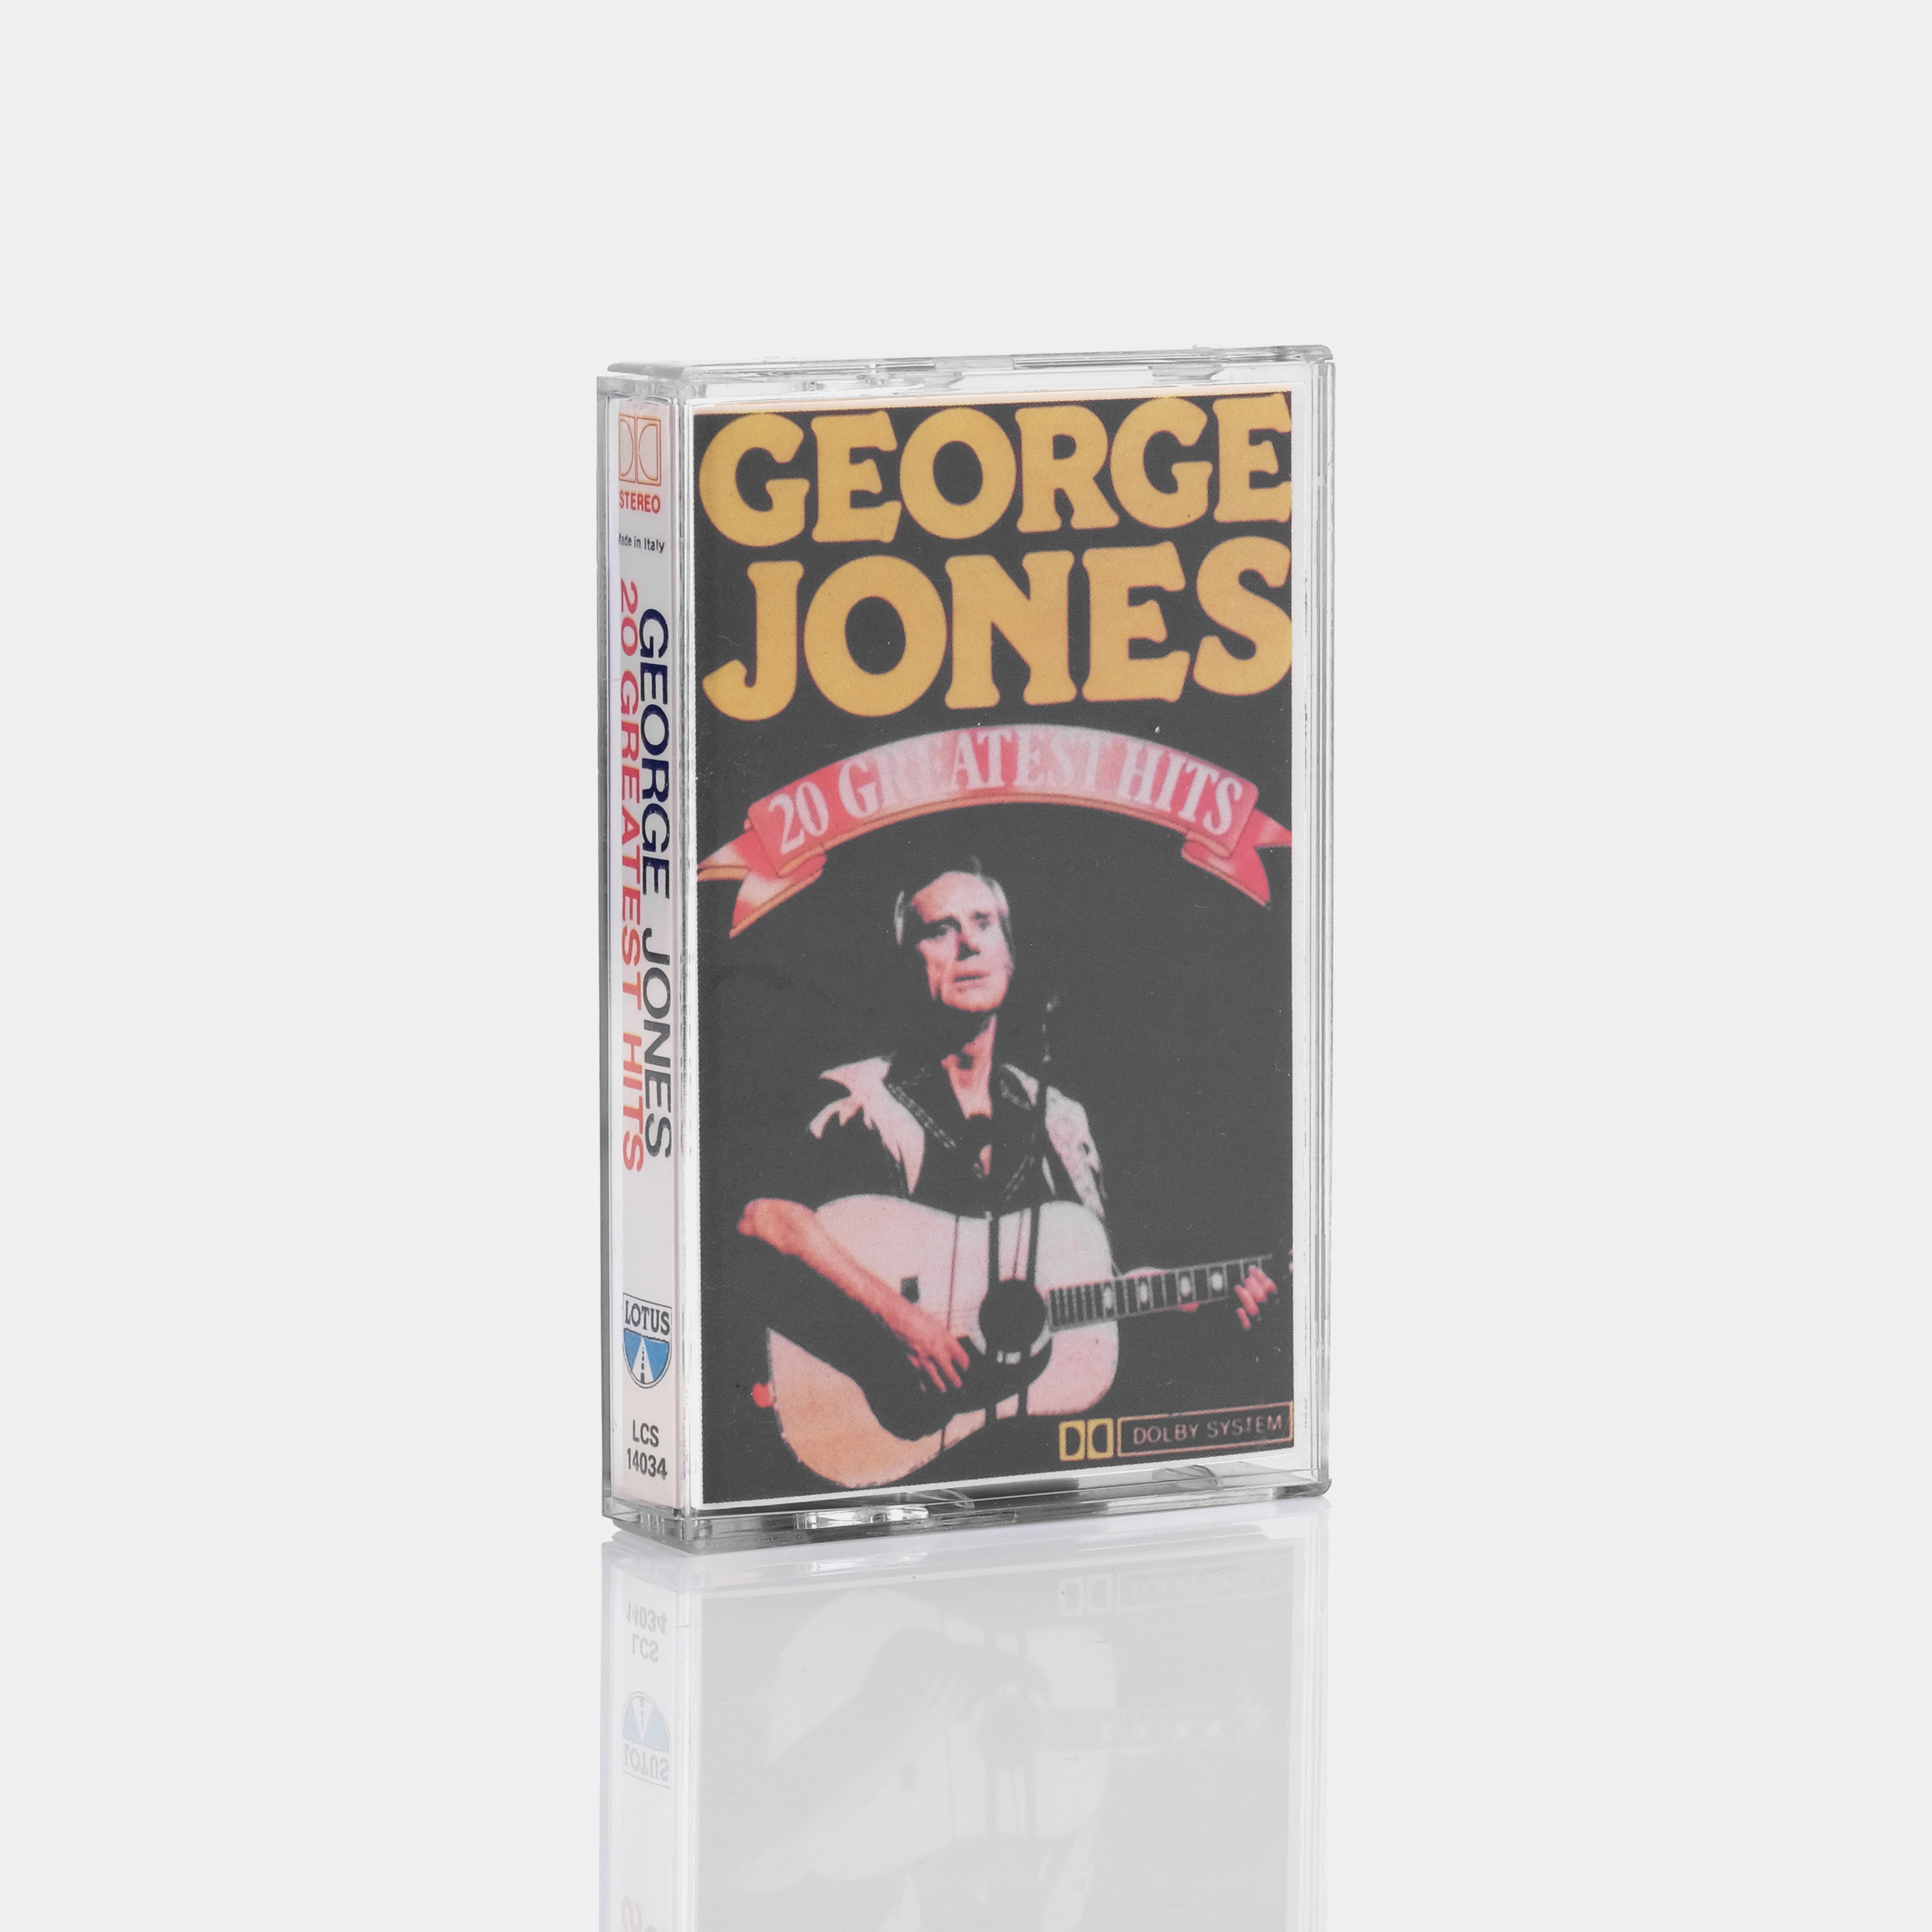 George Jones - 20 Greatest Hits Cassette Tape